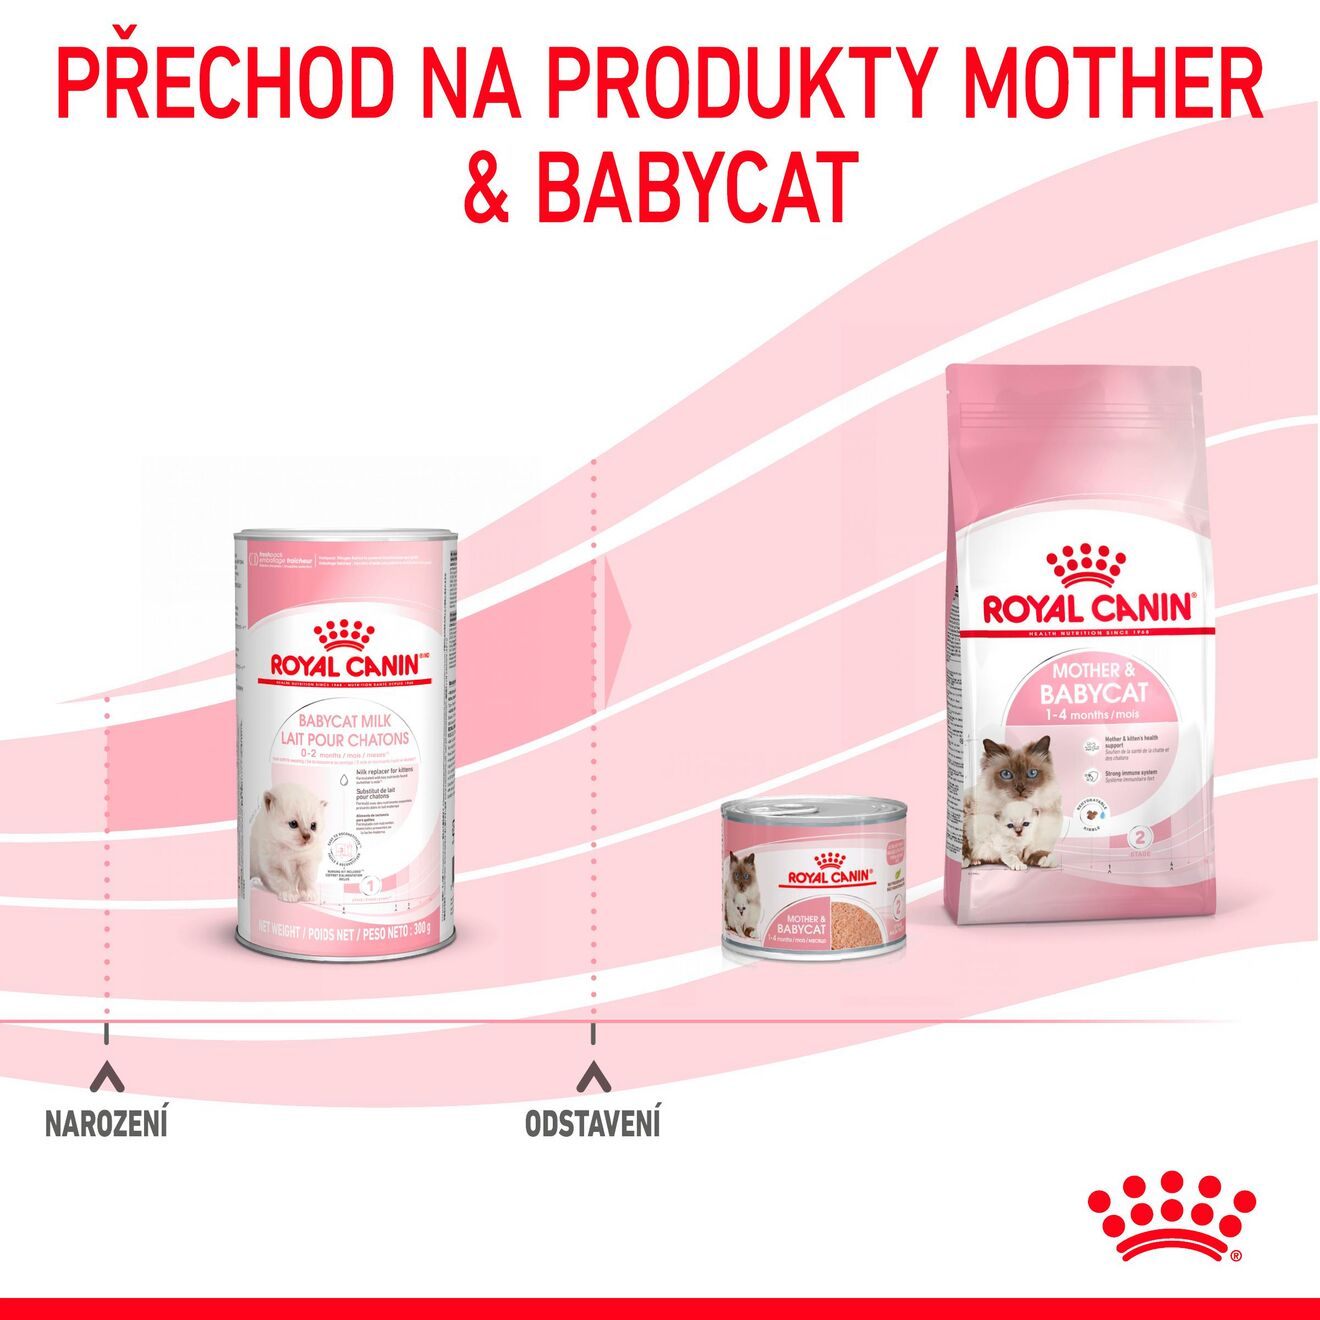 Babycat Milk